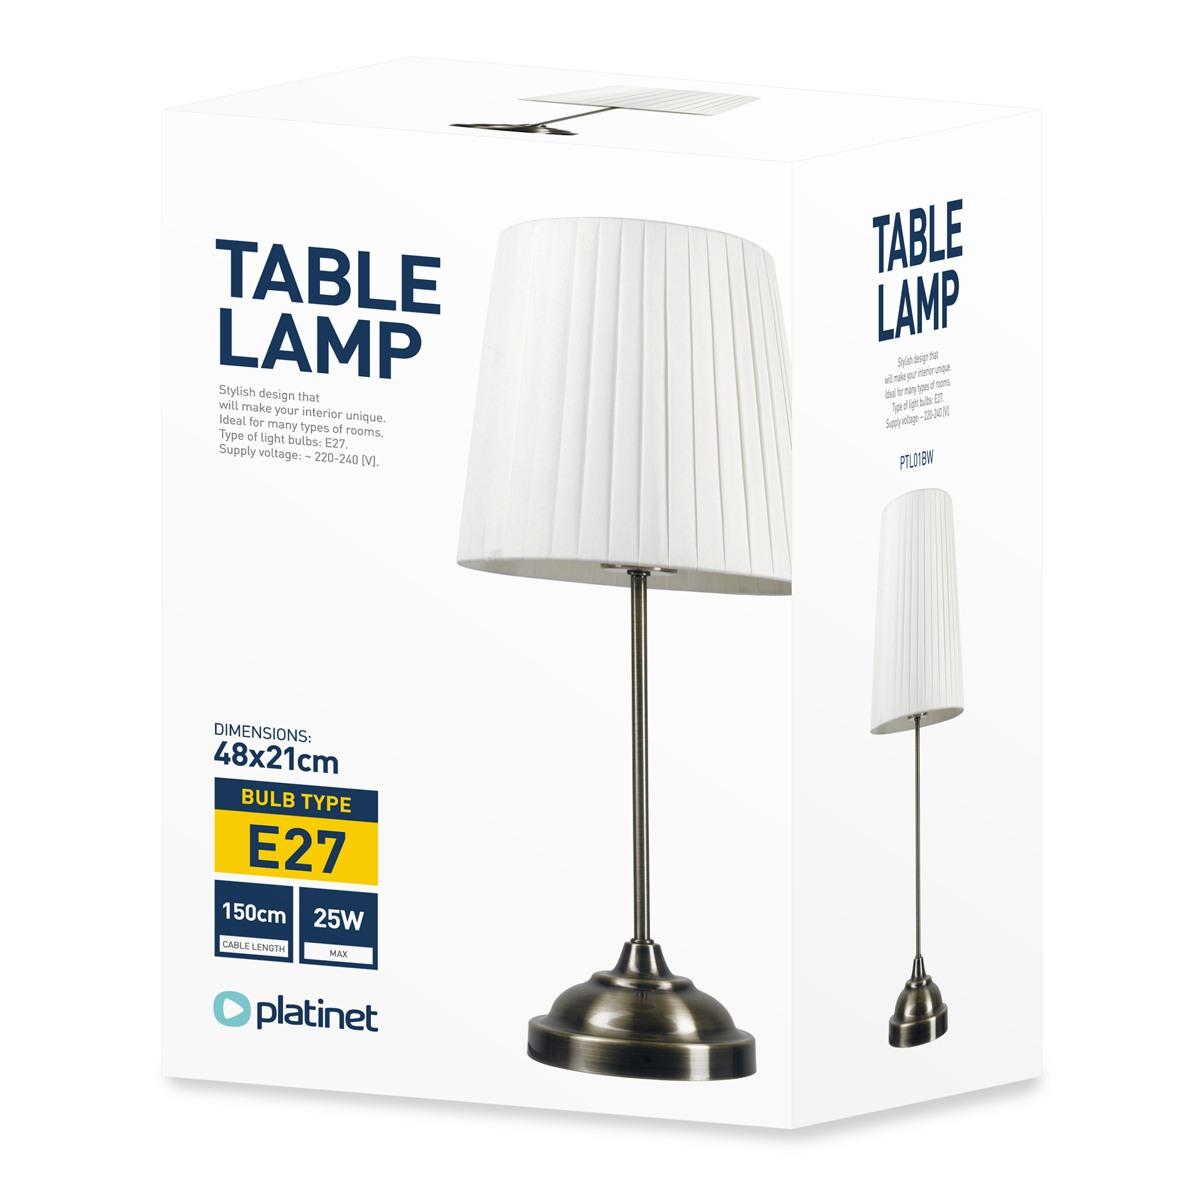 Platinet table lamp